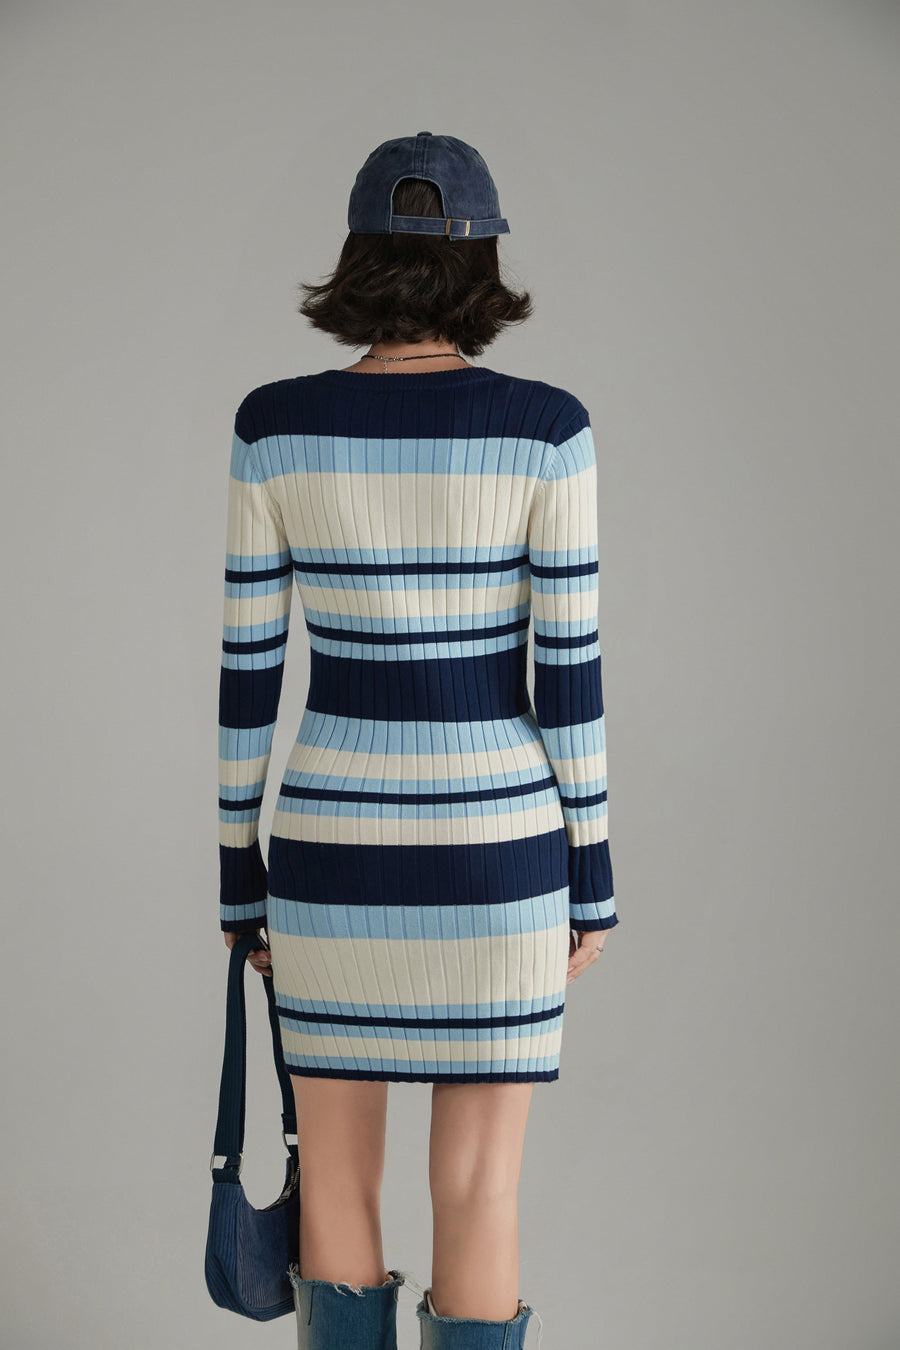 CHUU V-Neck Striped Dress